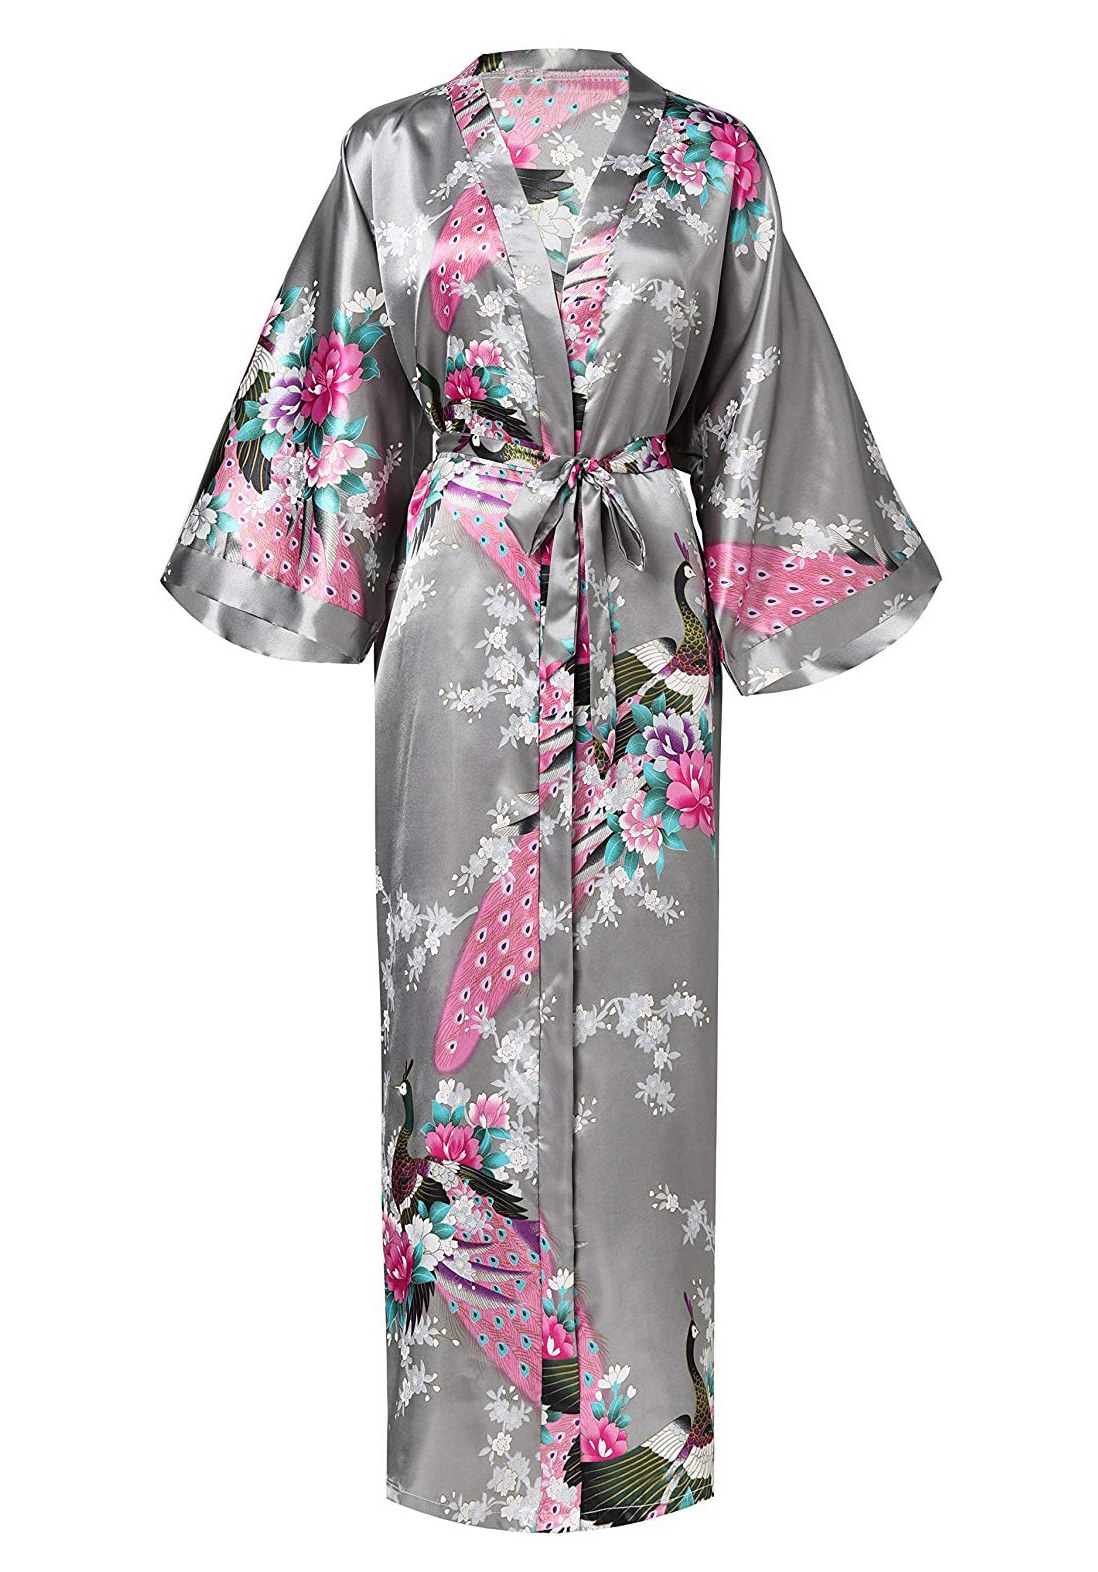 Ik geloof chef gespannen Grijze kimono satijn Japanse satijnen badjas kamerjas geisha ochtendjas  yukata kopen?